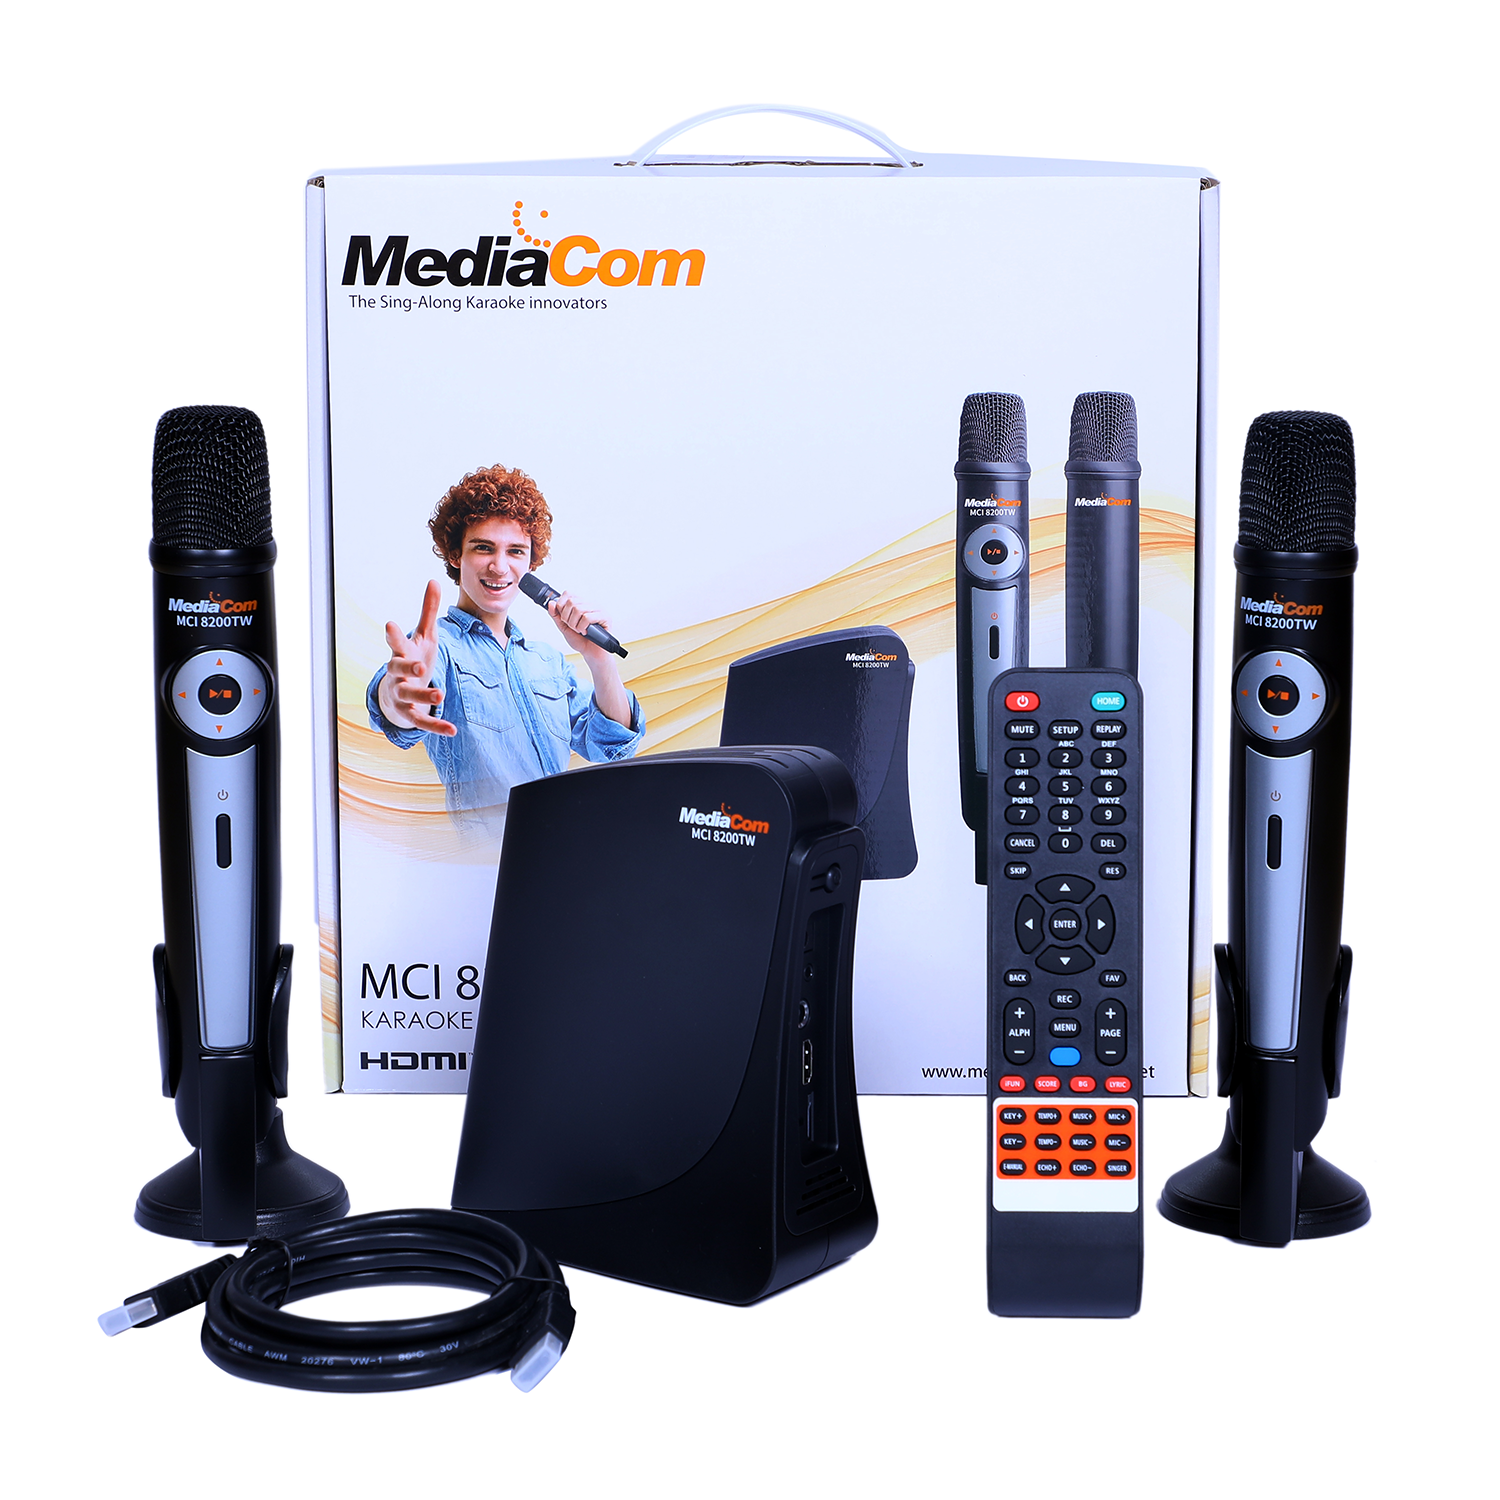 MediaCom MCI 8200TW Premium HD Karaoke